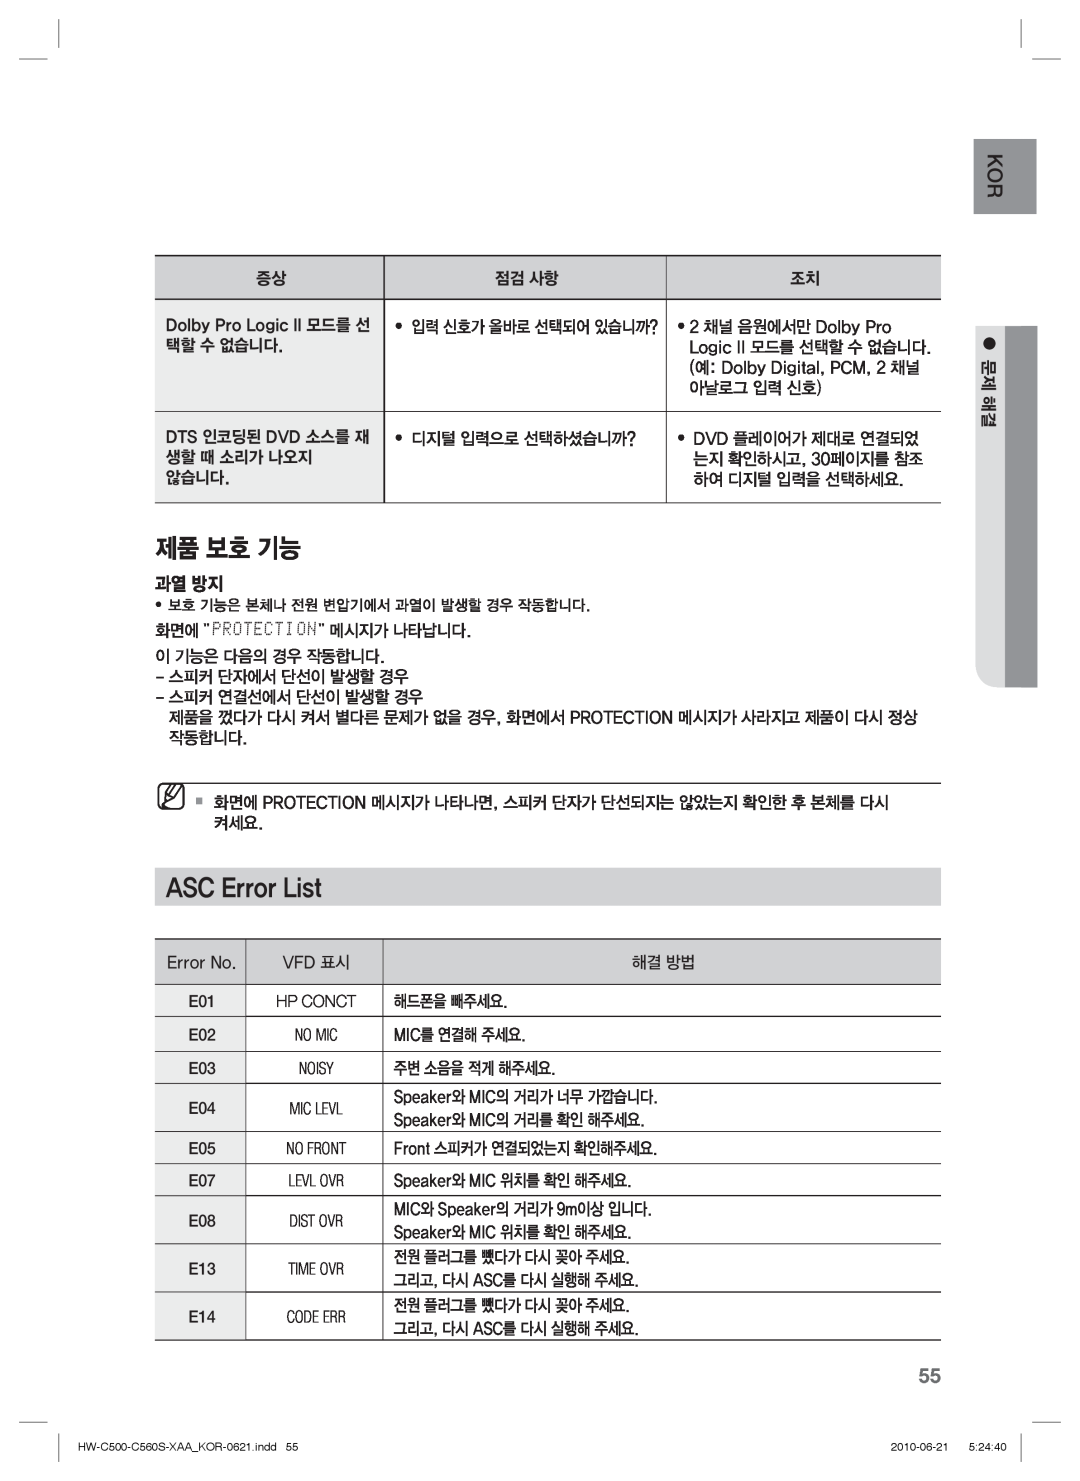 Samsung C560S manual 제품 보호 기능, ASC Error List, 과열 방지 